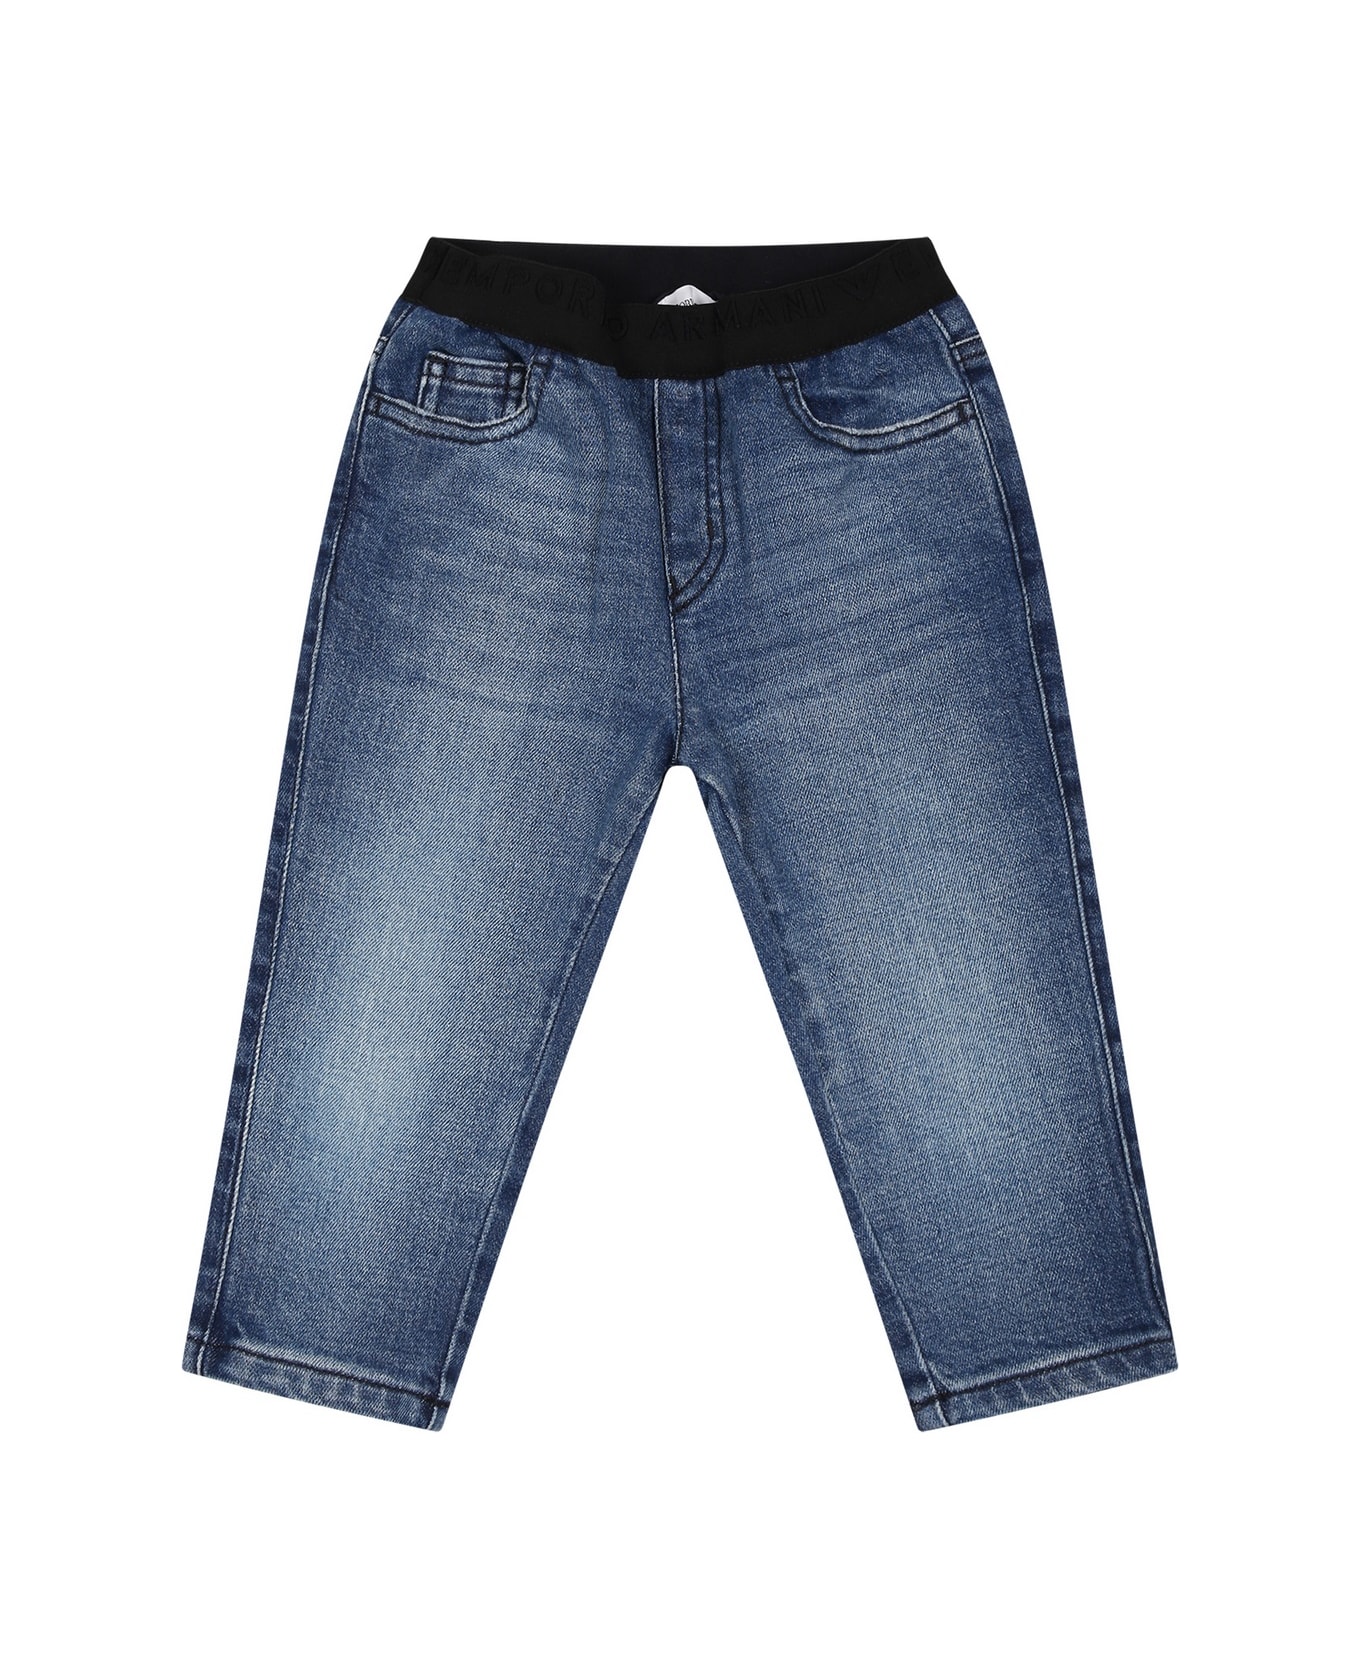 Armani Collezioni Blue Jeans For Baby Boy With Logo - Denim